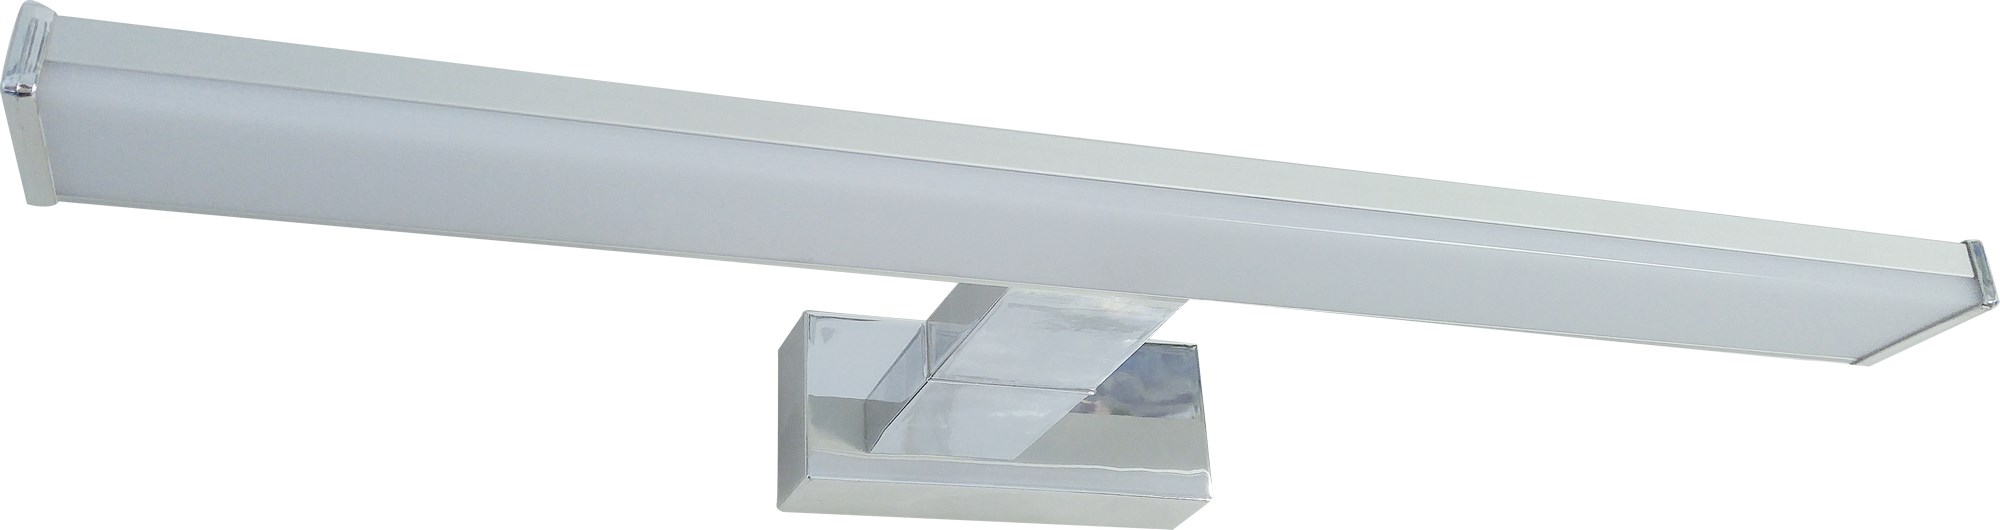 LED svítidlo koupelnové MIRROR 15W NW, 78 cm, 4000K, 1300lm, IP44, Greenlux GXLS205 - zvìtšit obrázek